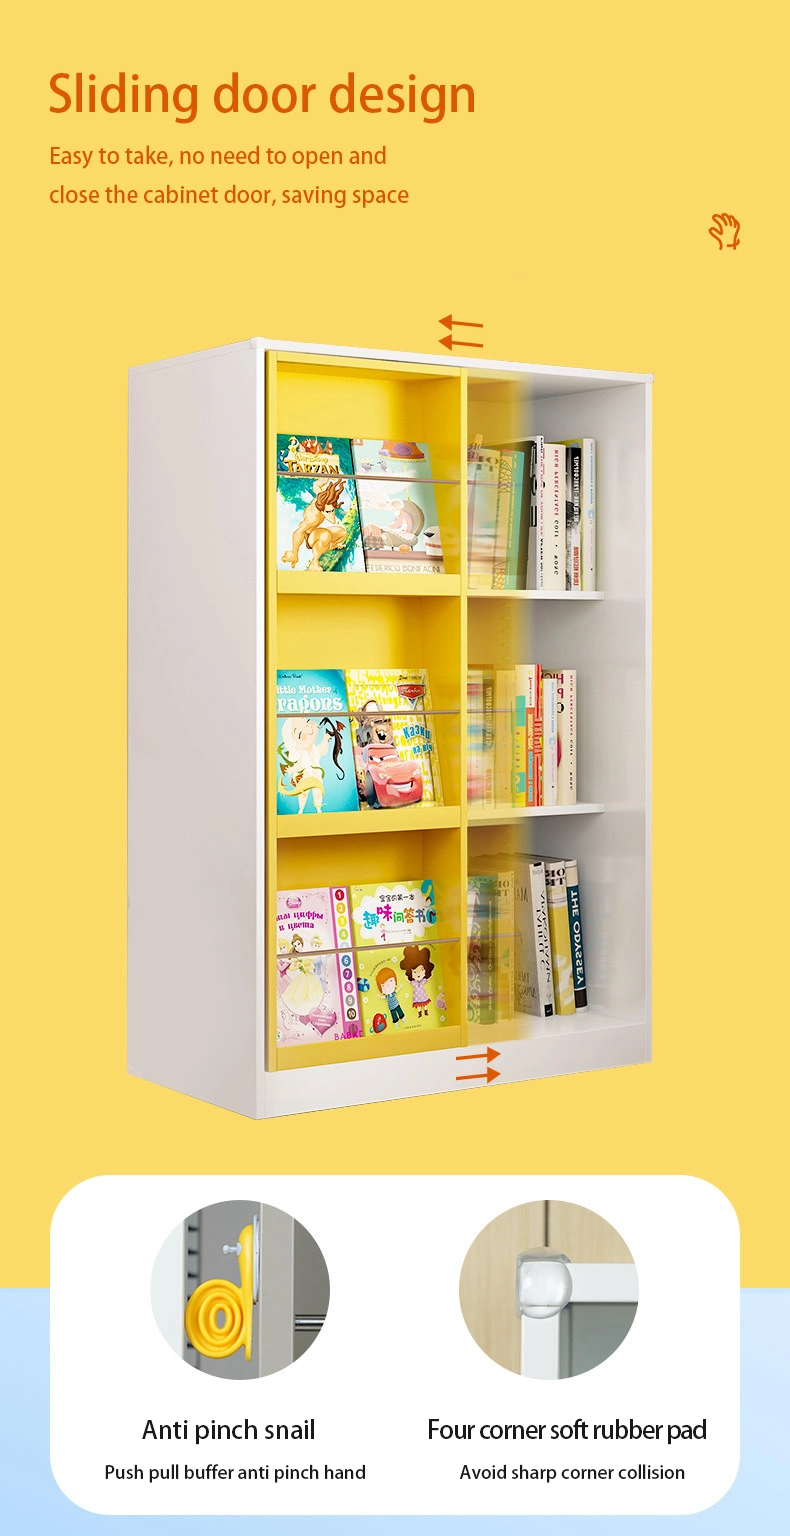 Children Sliding Door Magazine Book Storage Rack Bookcase Kids Bookshelf